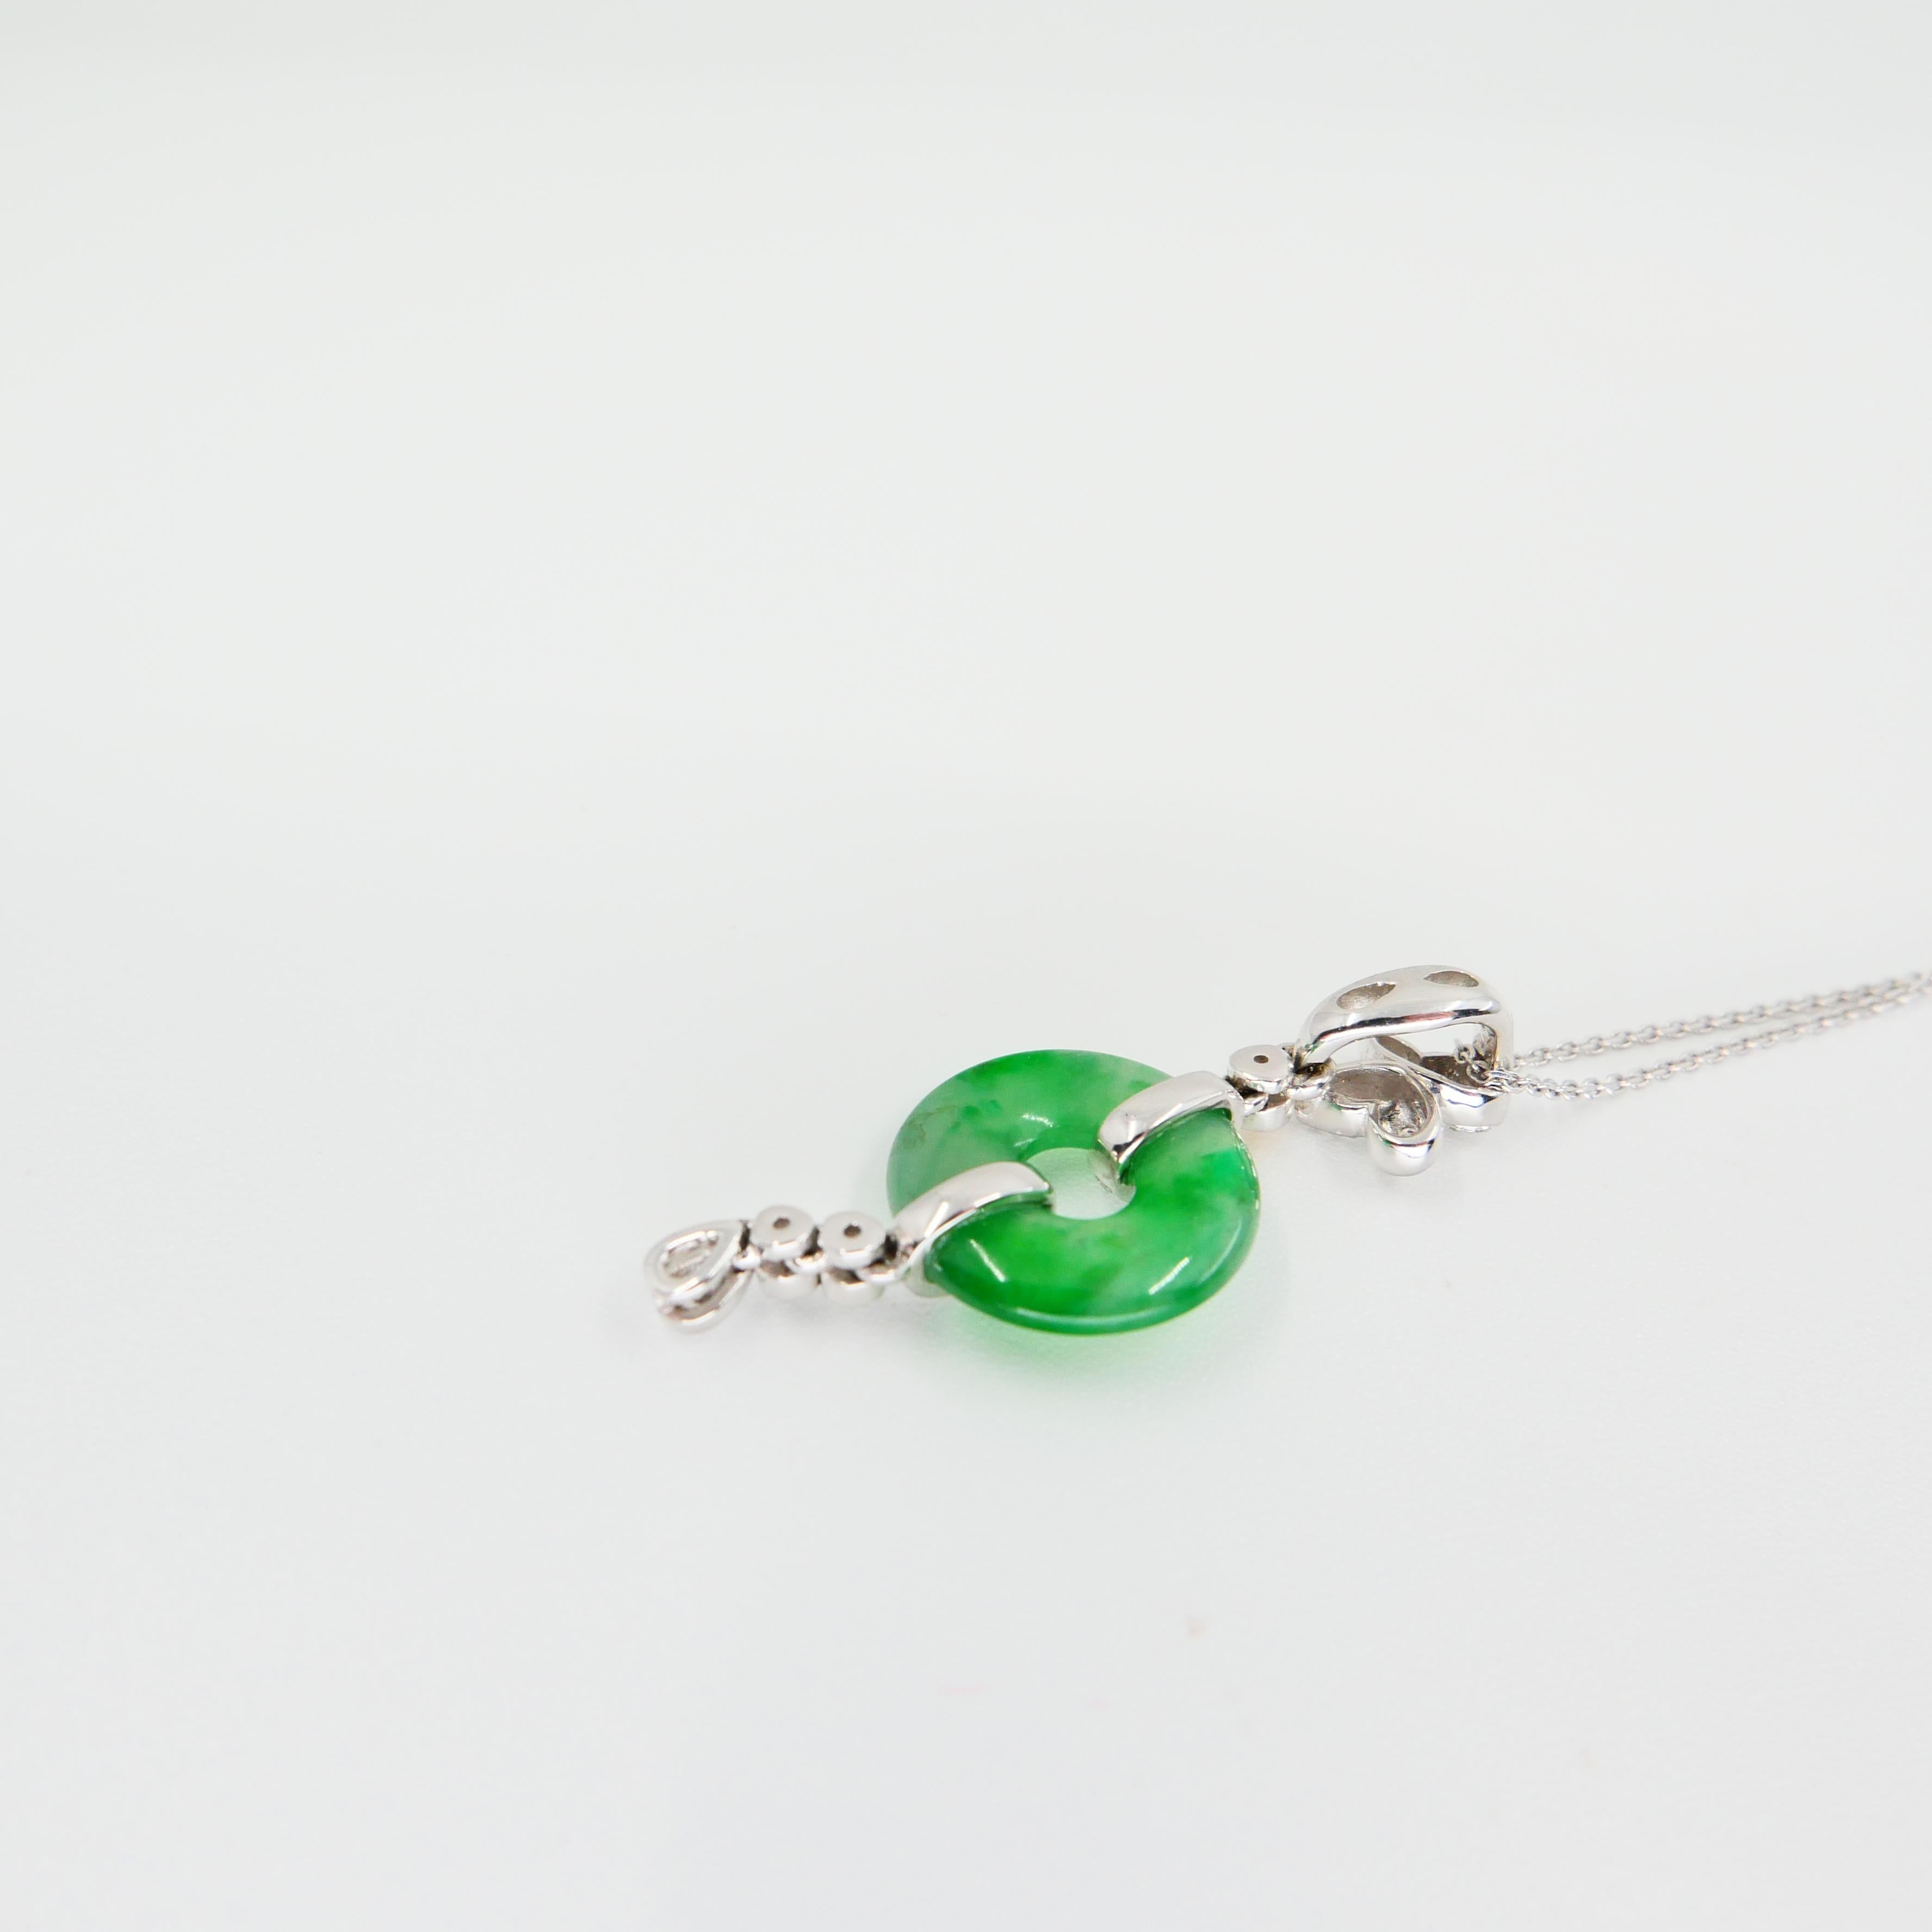 Certified Type A Jadeite Jade Diamond Pendant Drop Necklace, Apple Green Veins For Sale 2